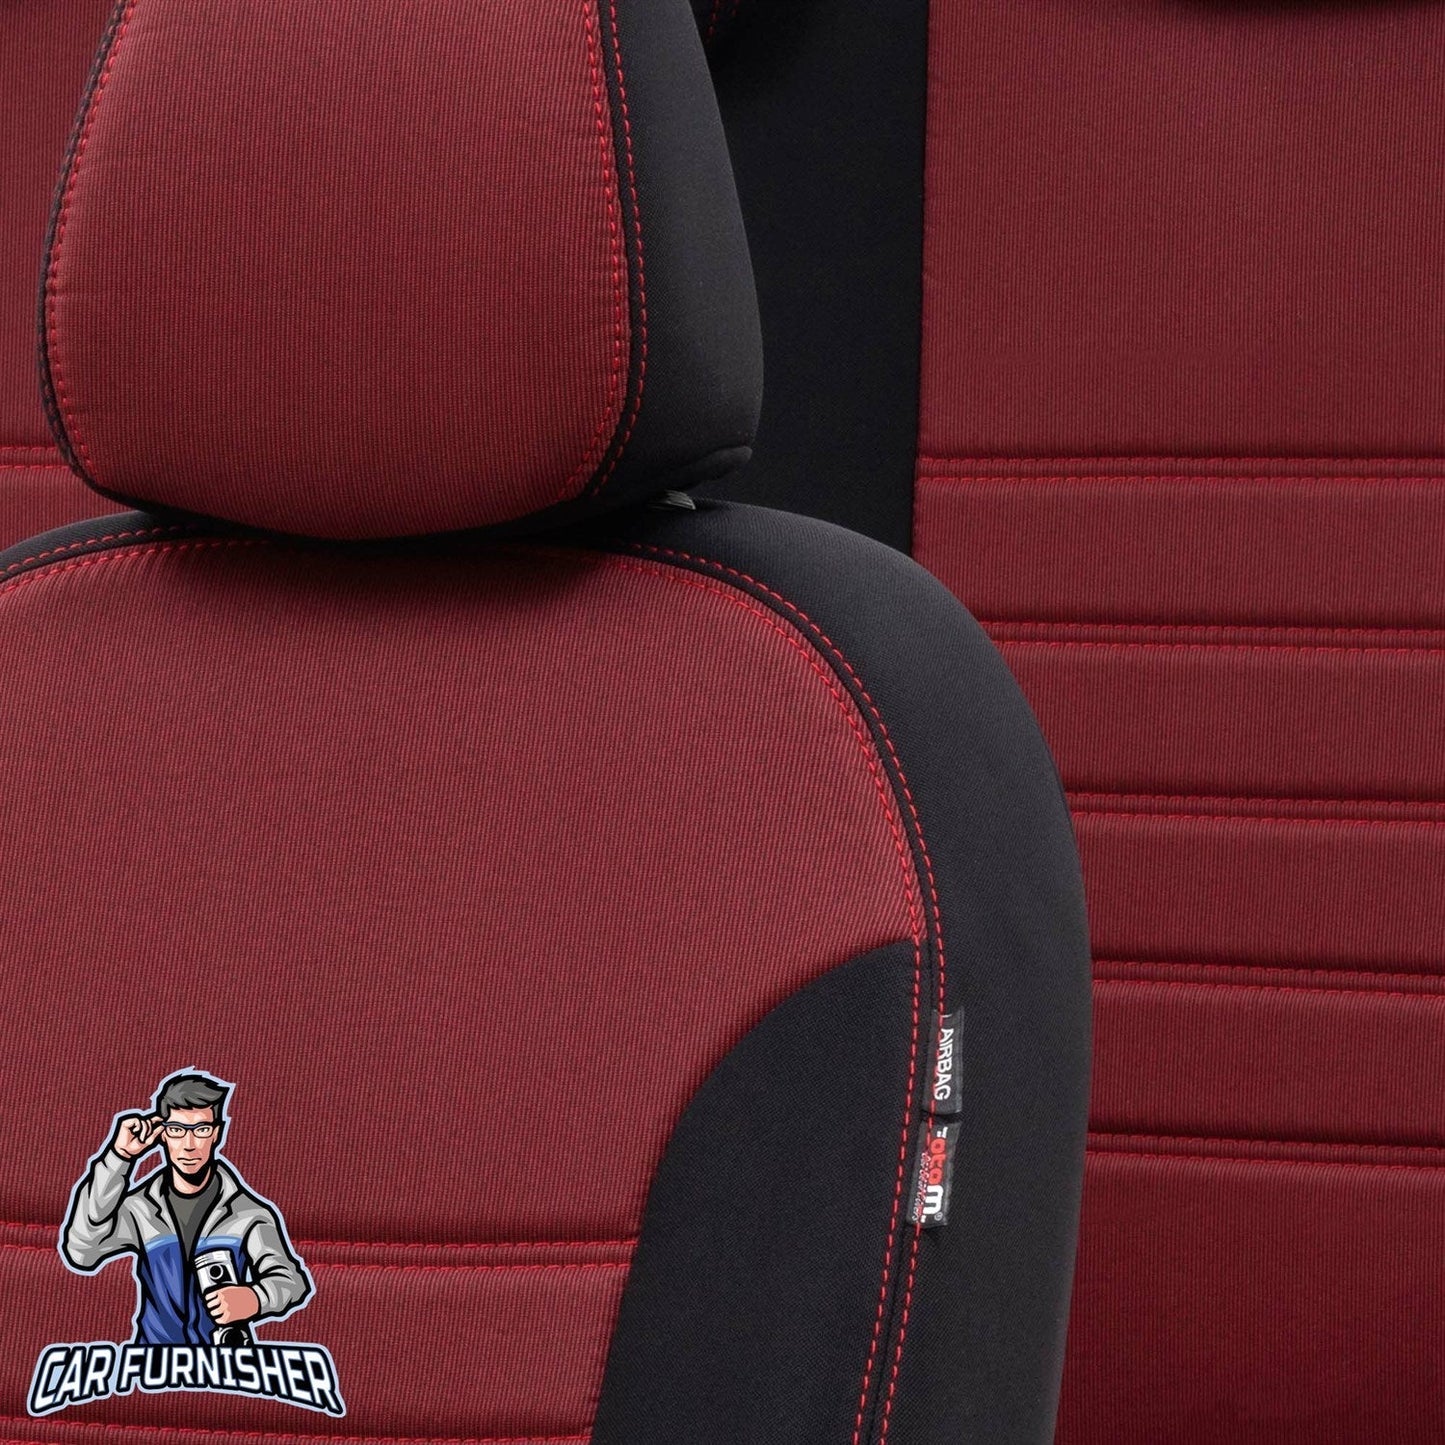 Fiat Scudo Seat Covers Original Jacquard Design Red Jacquard Fabric